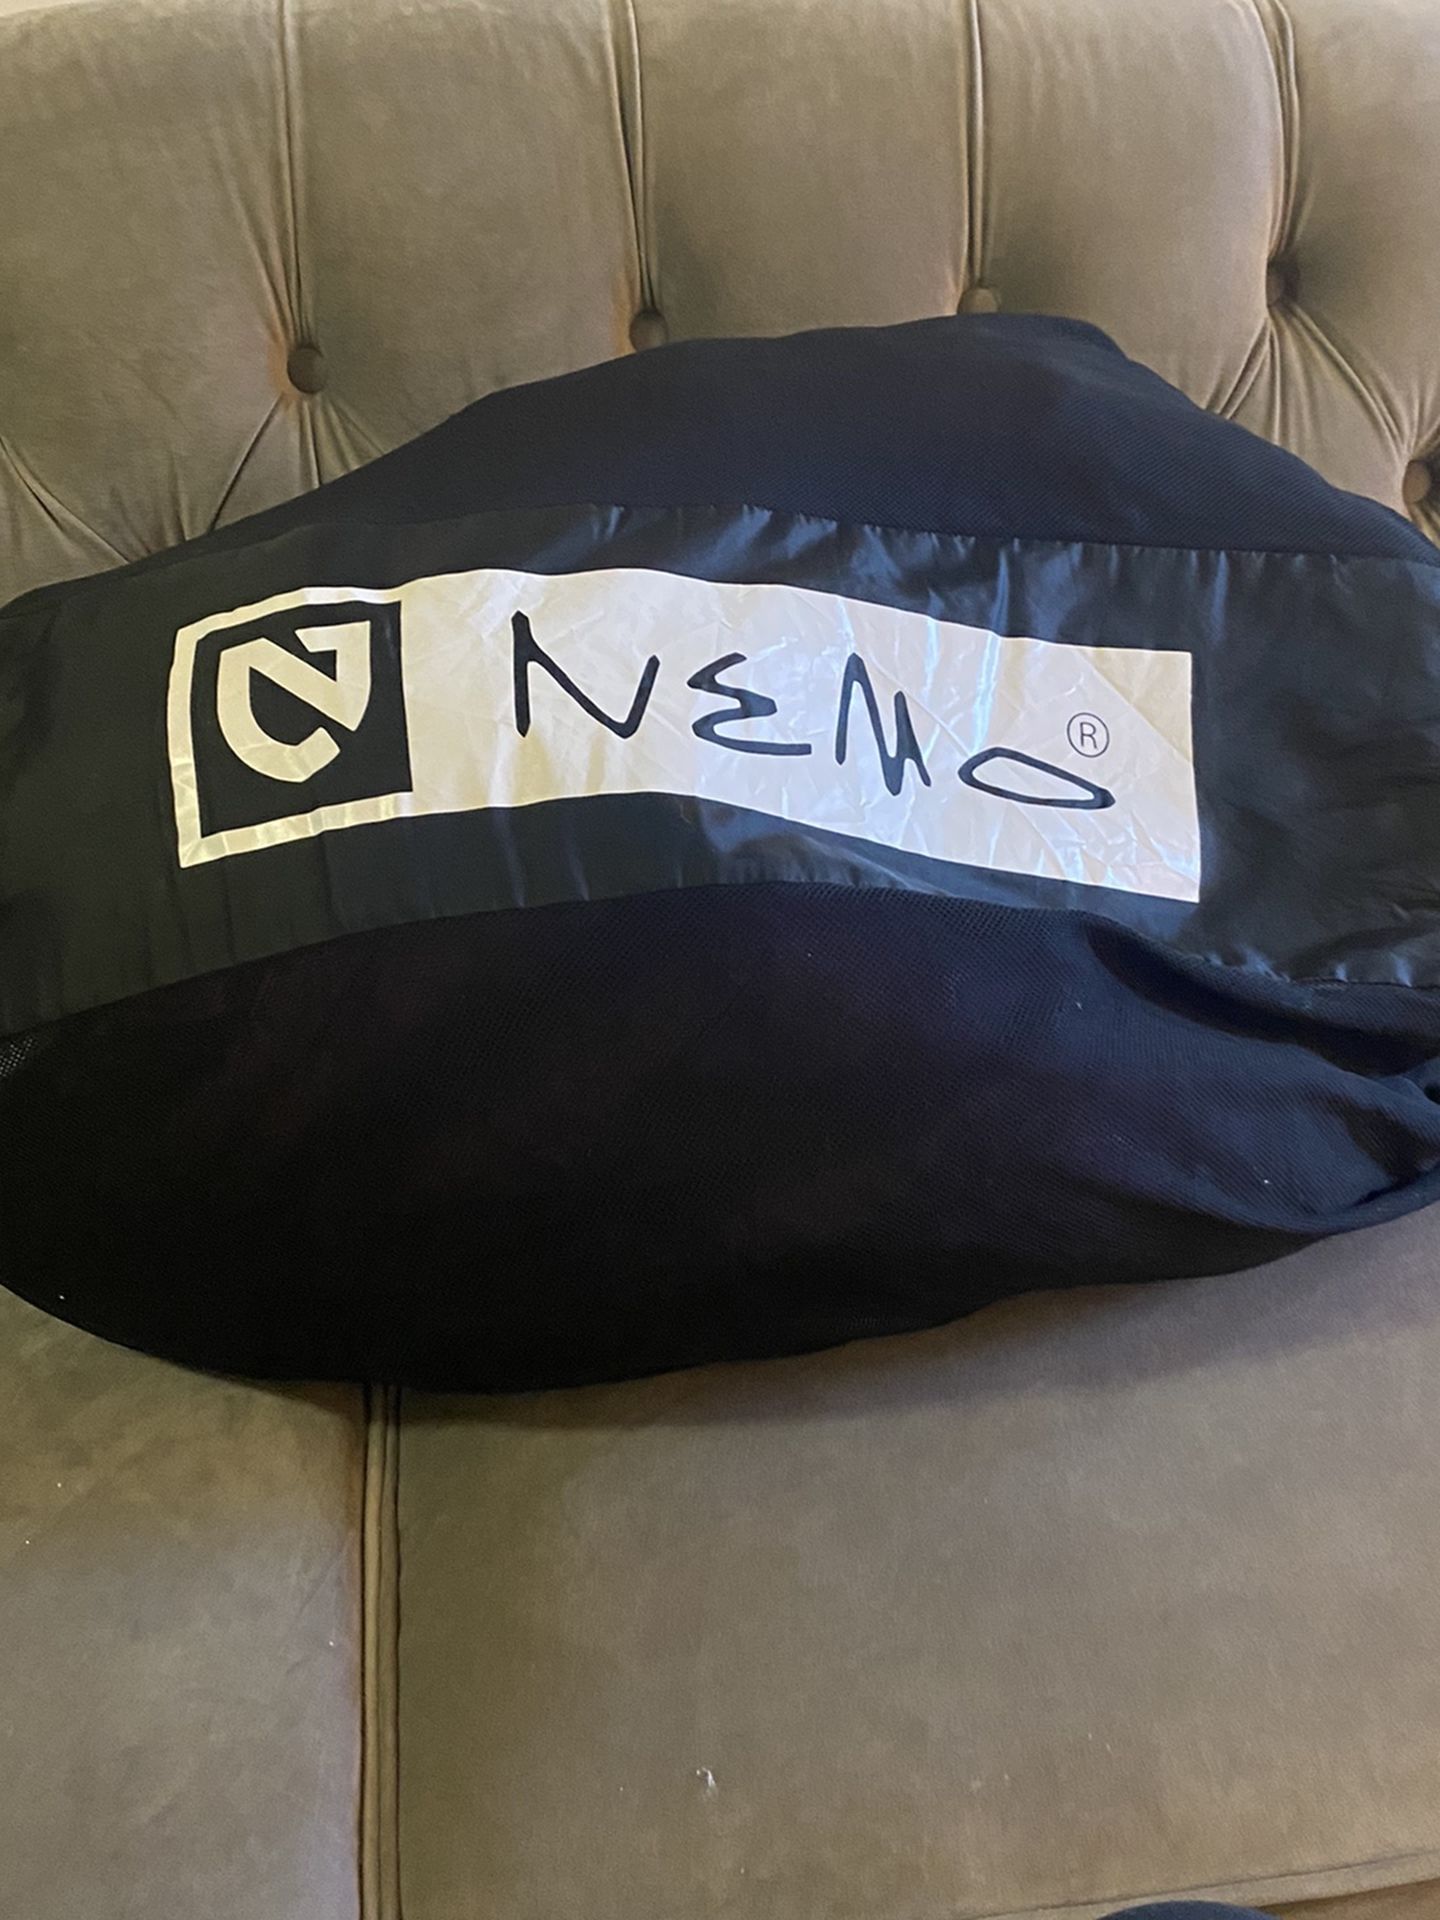 Nemo Zero Degree Sleeping Bag! Used Once!